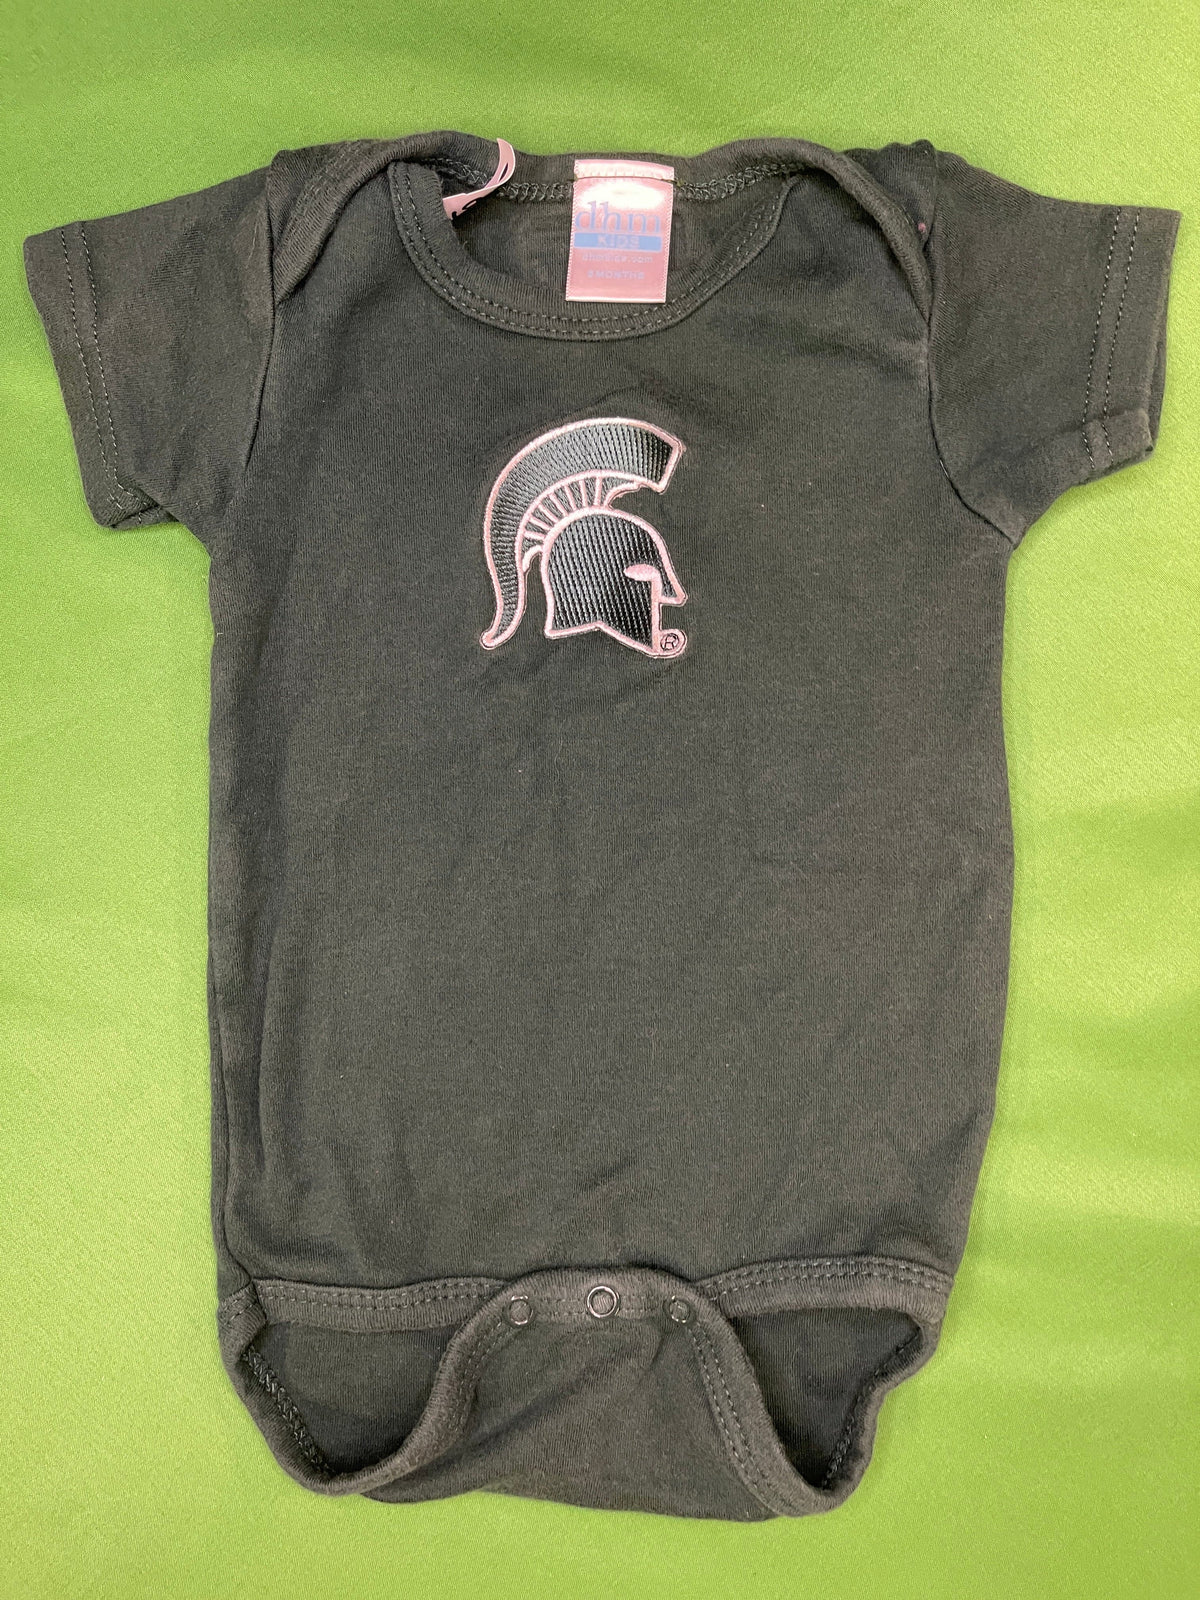 NCAA Michigan State Spartans Infant Baby Bodysuit/Vest 6 Months